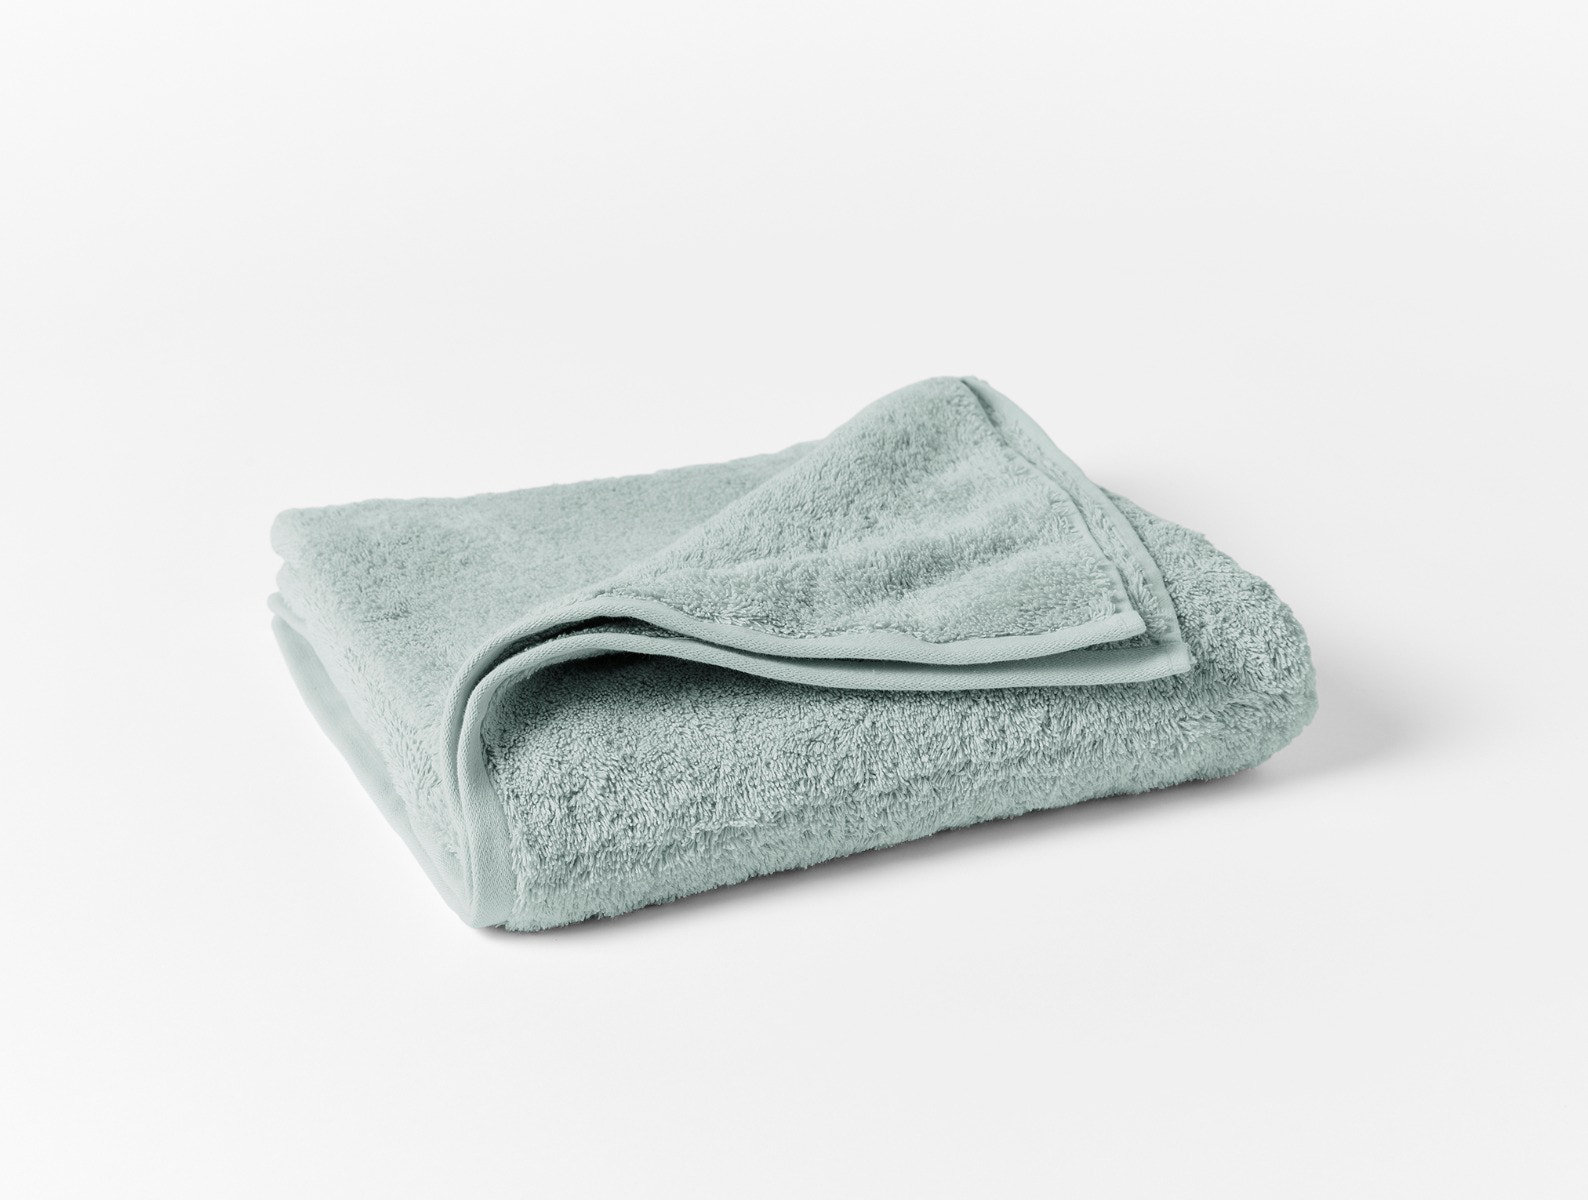 Melissa Linen Large Bath Towel Set, 3 Piece, Absorbent, Quick Dry, Bath Sheet, Hand Towel, Washcloth, Yellow